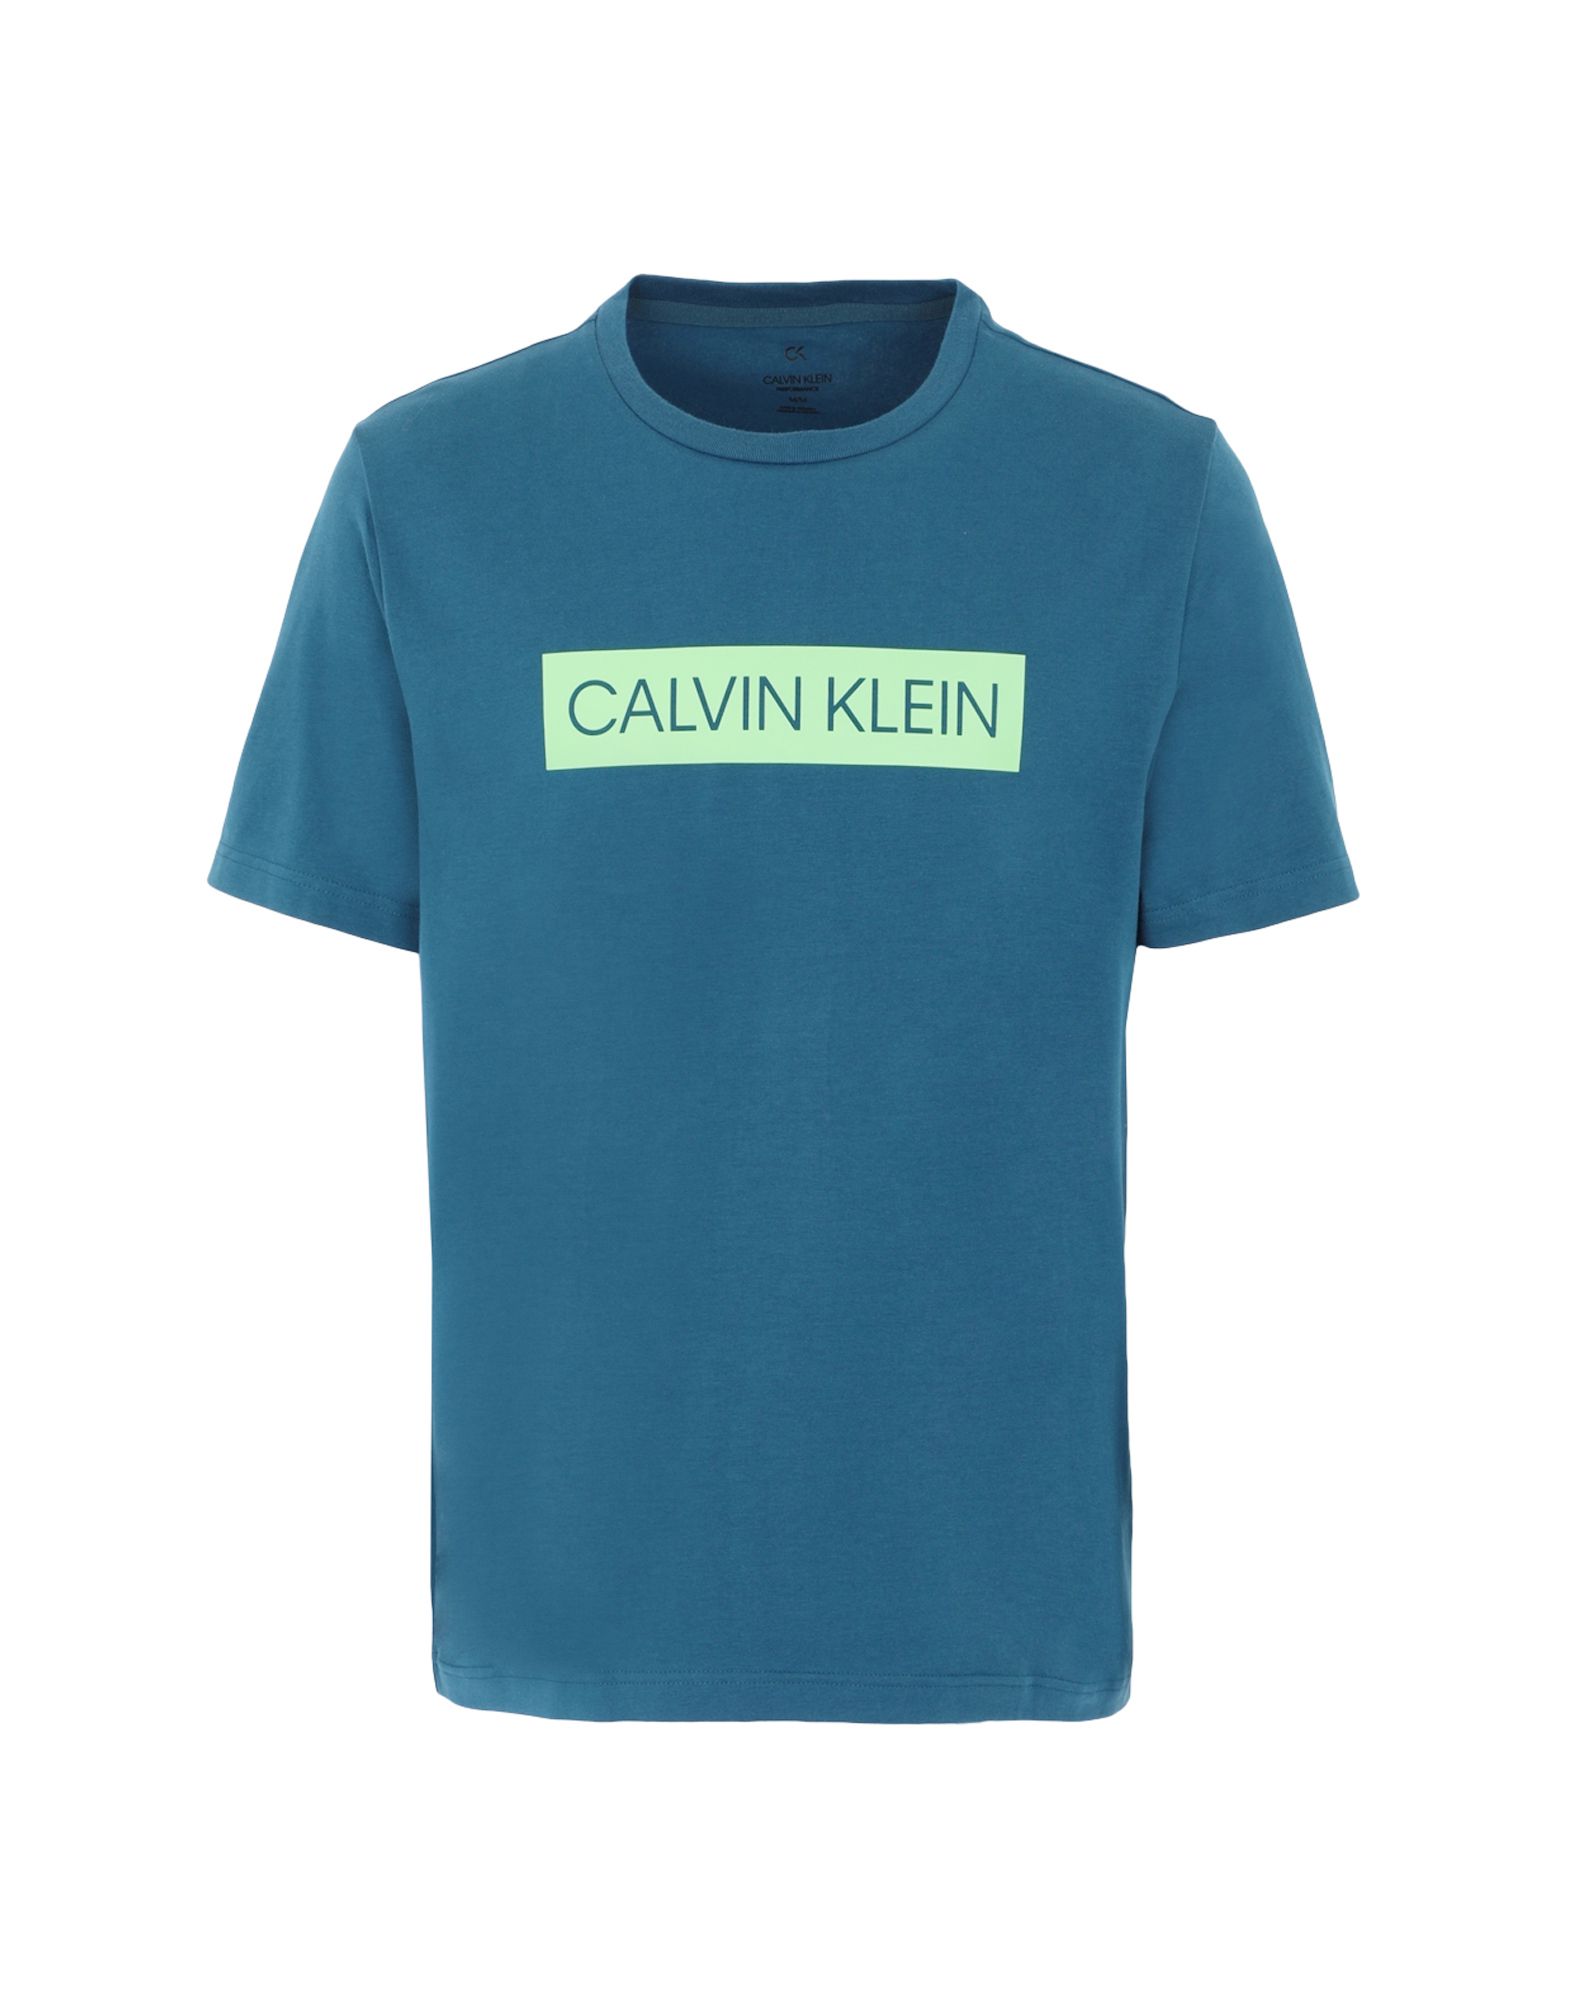 CALVIN KLEIN PERFORMANCE Футболка calvin klein футболка